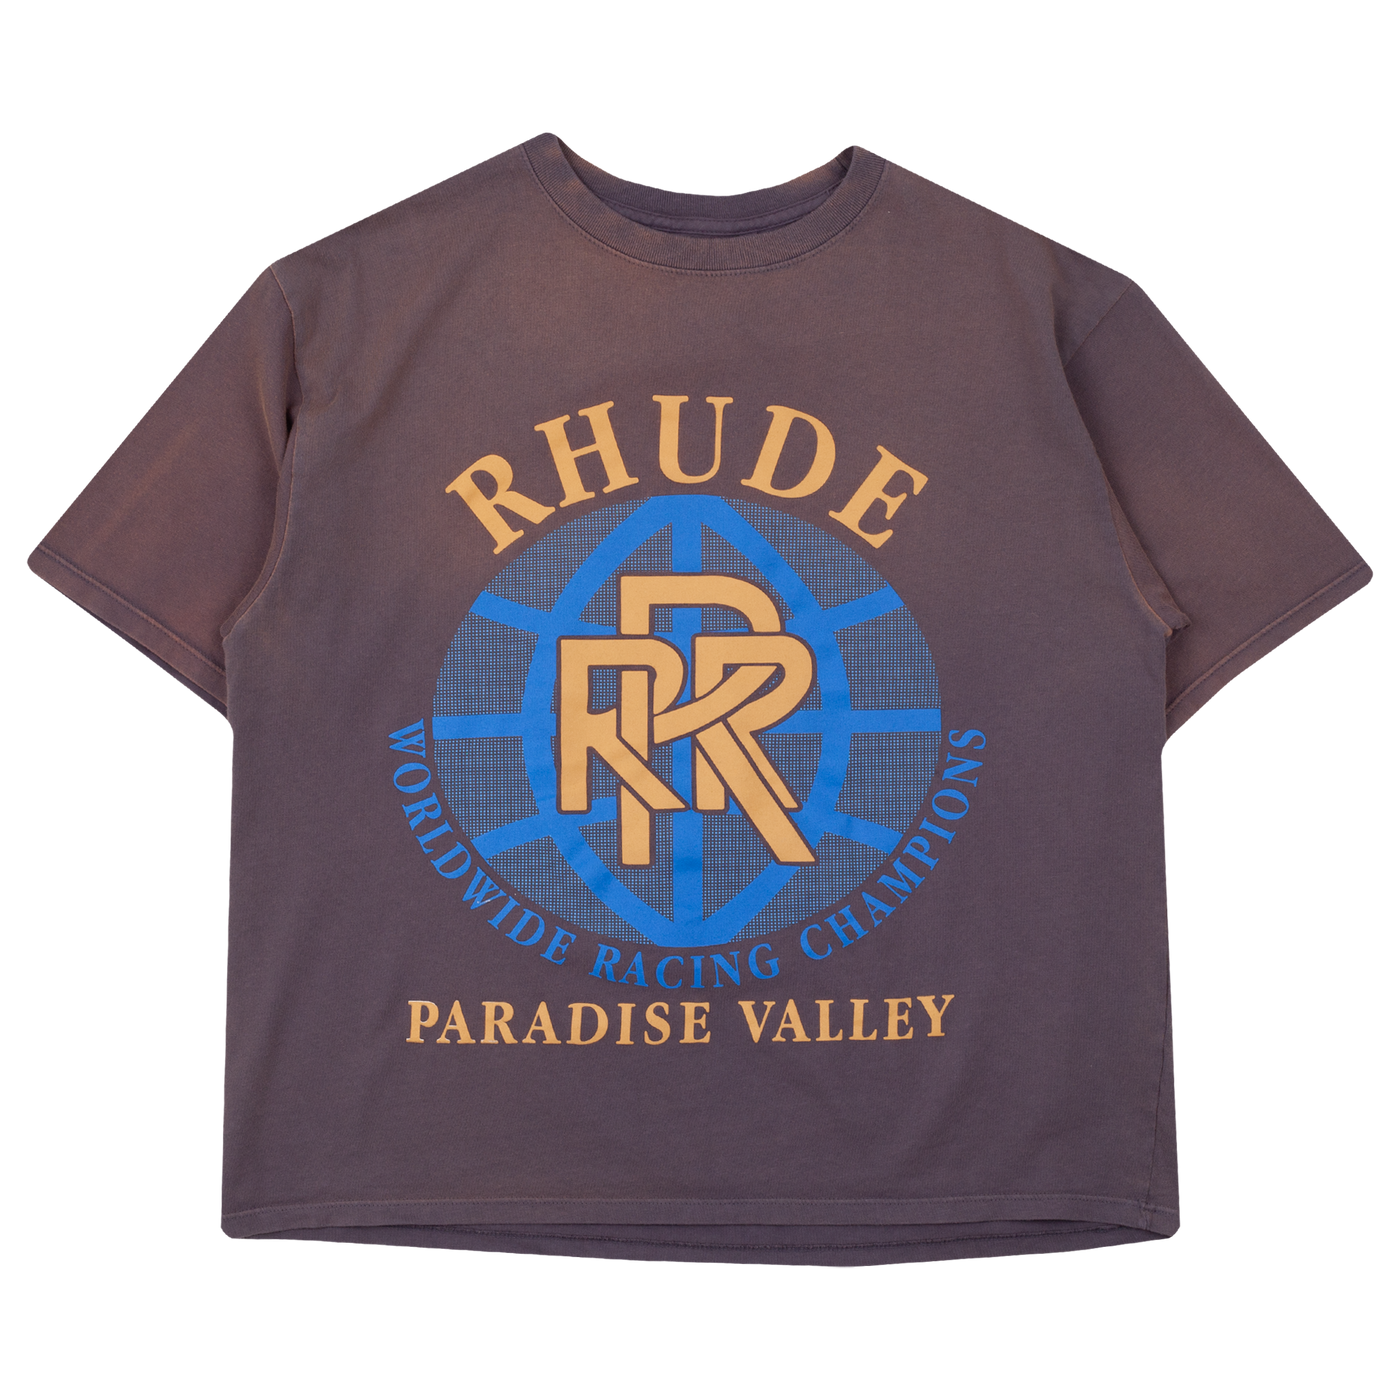 Paradise Valley T-Shirt